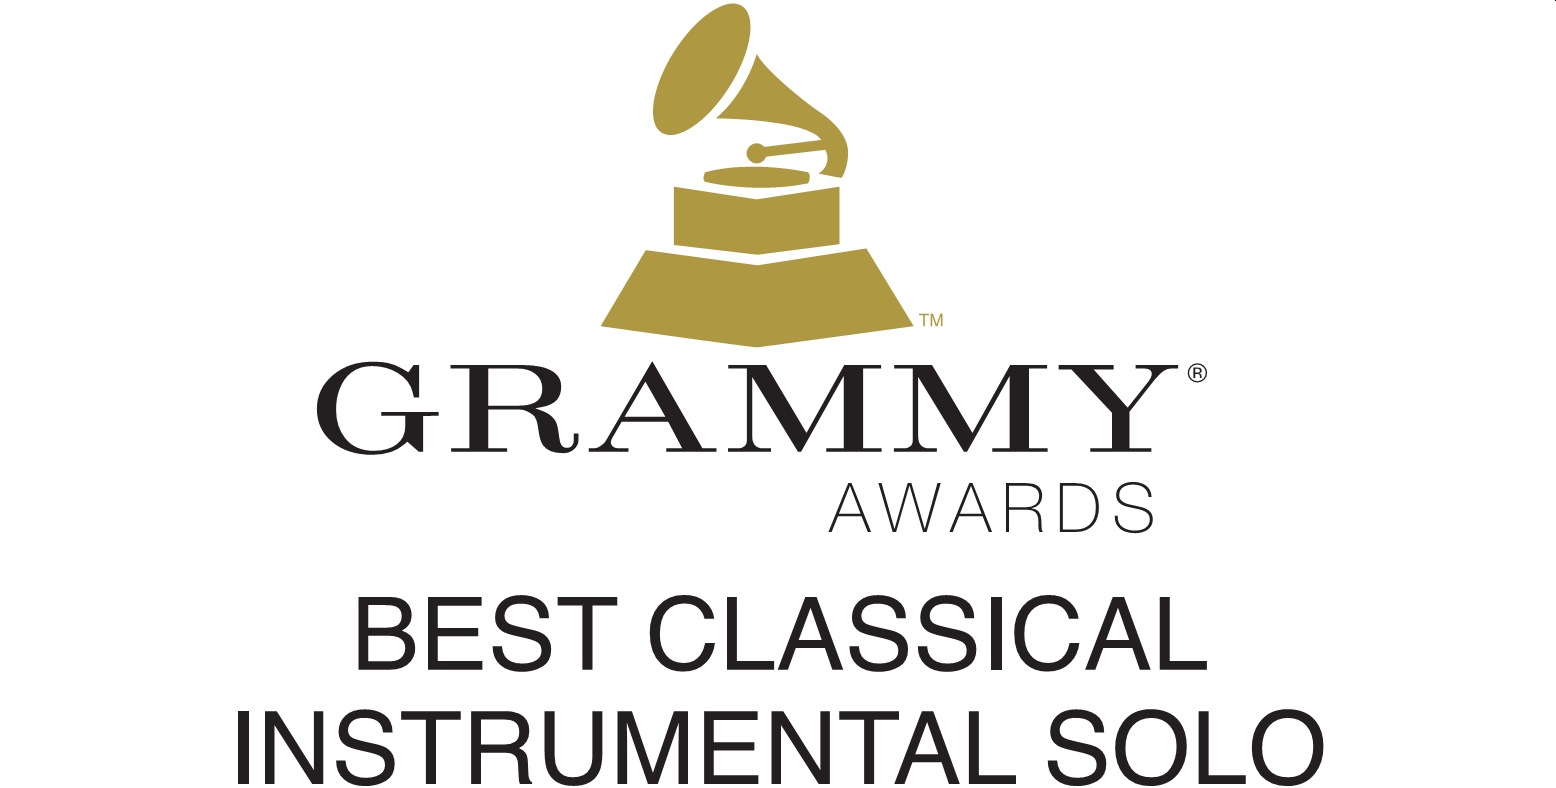 Grammy Award: 'Best Classical Instrumental Solo' (2017)